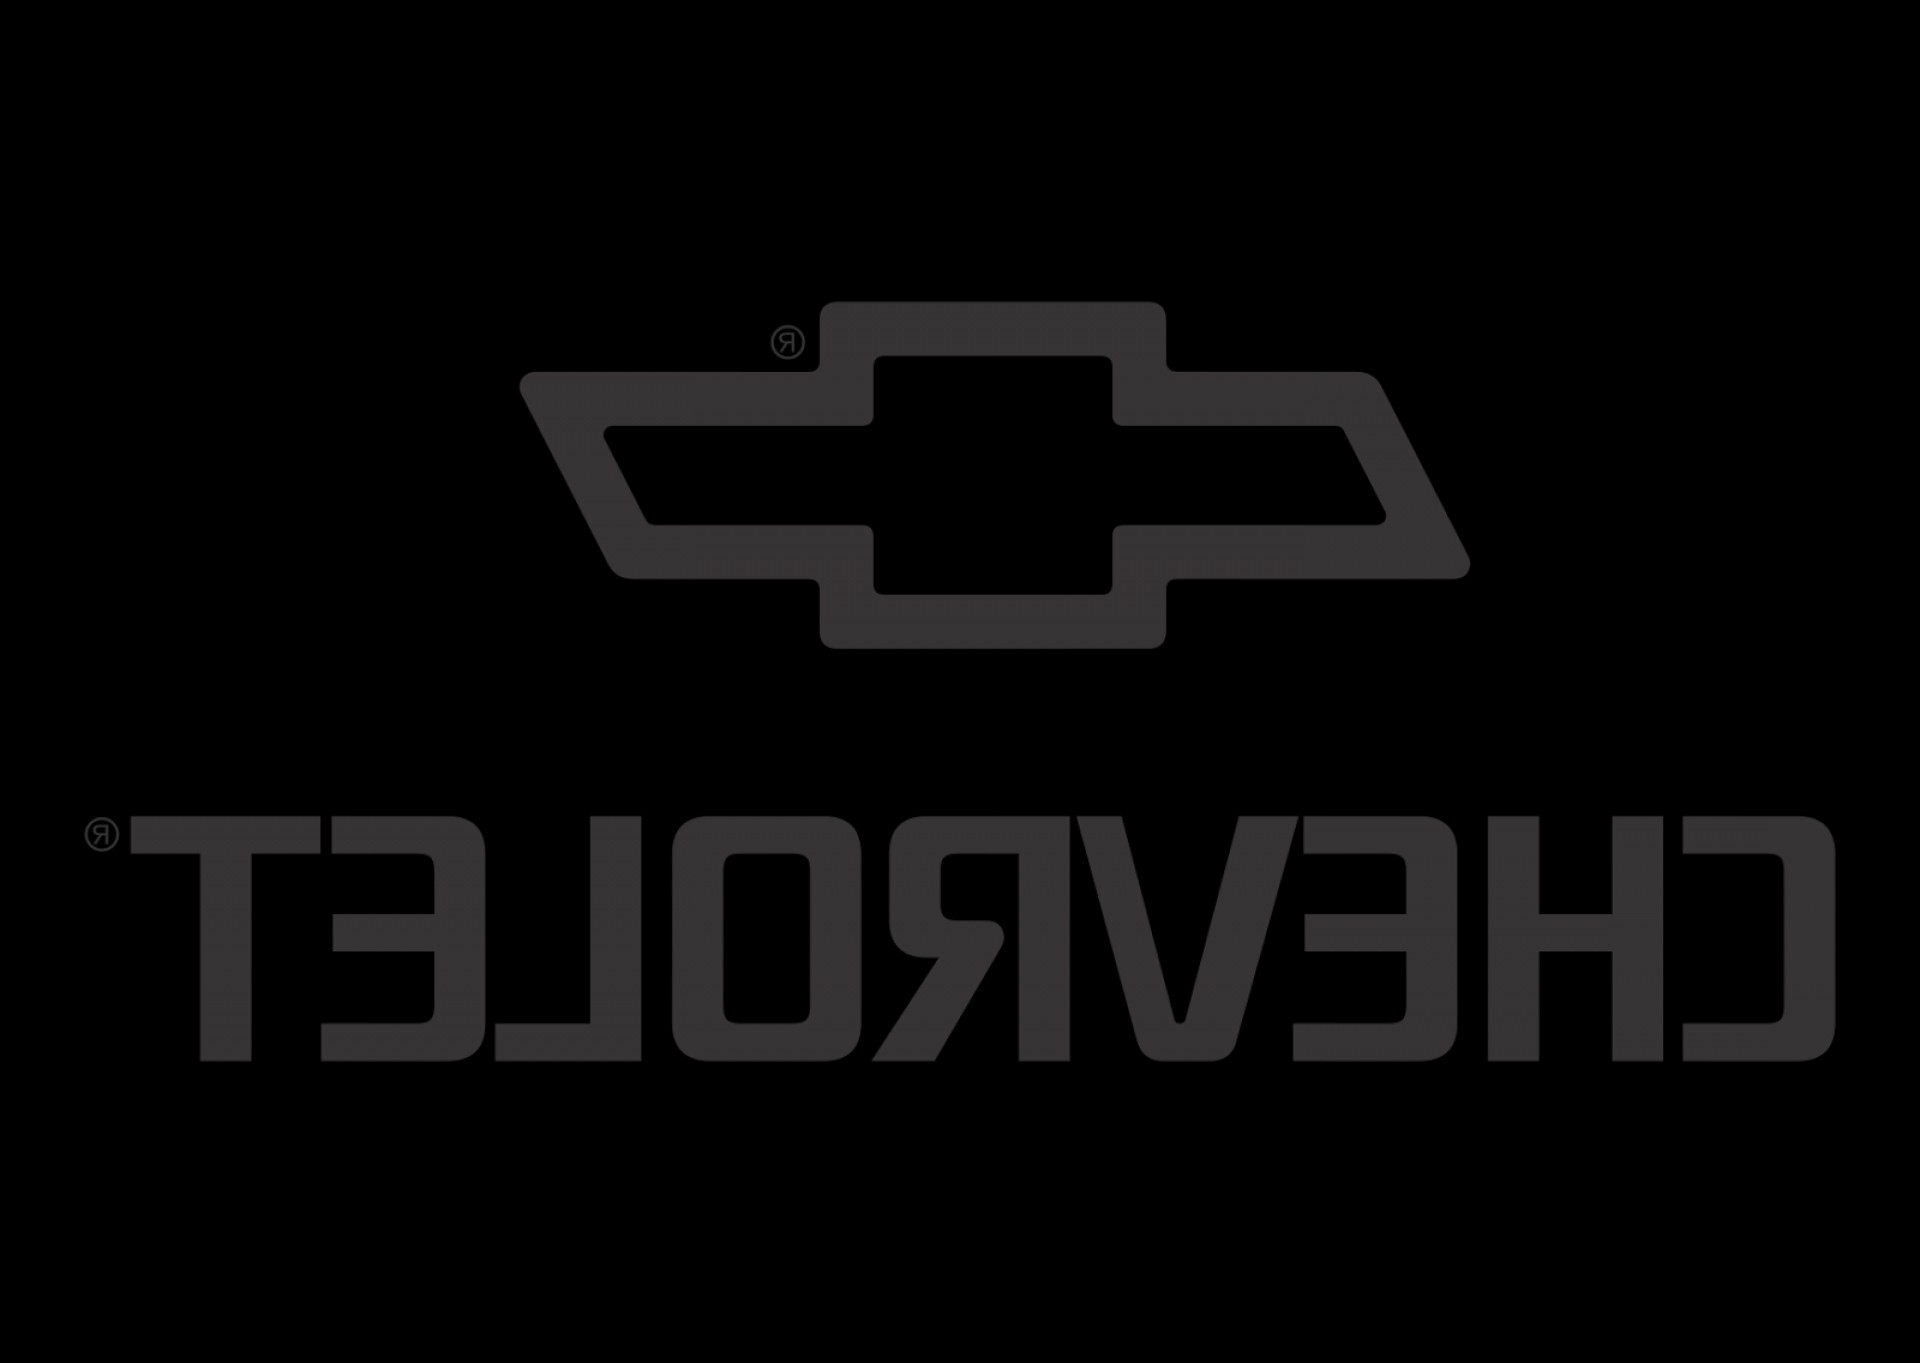 Facebook Logo Vector Ai at GetDrawings | Free download